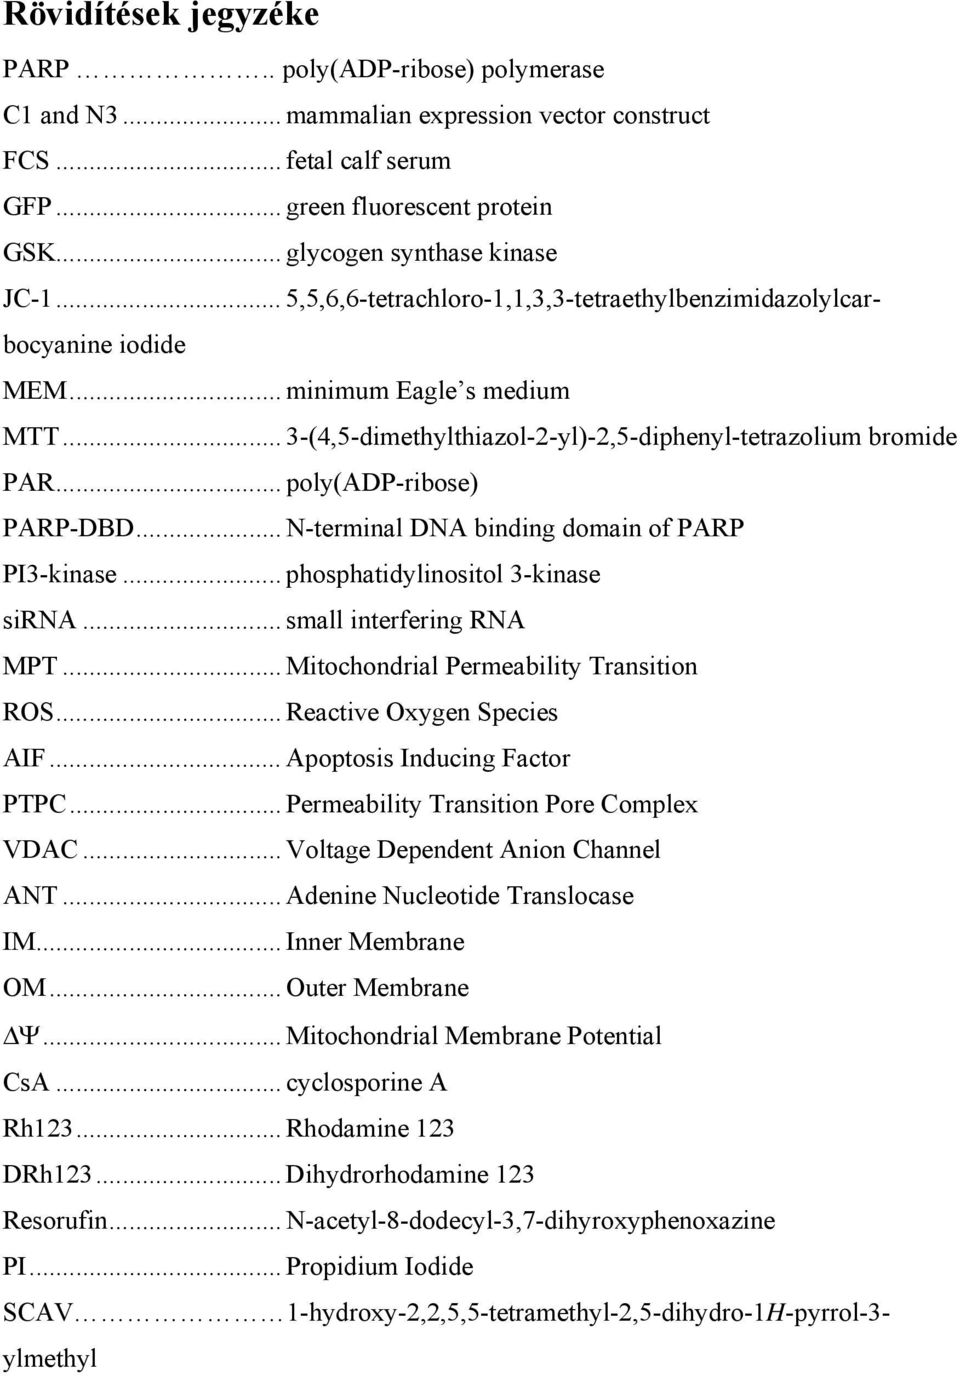 .. poly(adp-ribose) PARP-DBD... N-terminal DNA binding domain of PARP PI3-kinase... phosphatidylinositol 3-kinase sirna... small interfering RNA MPT... Mitochondrial Permeability Transition ROS.